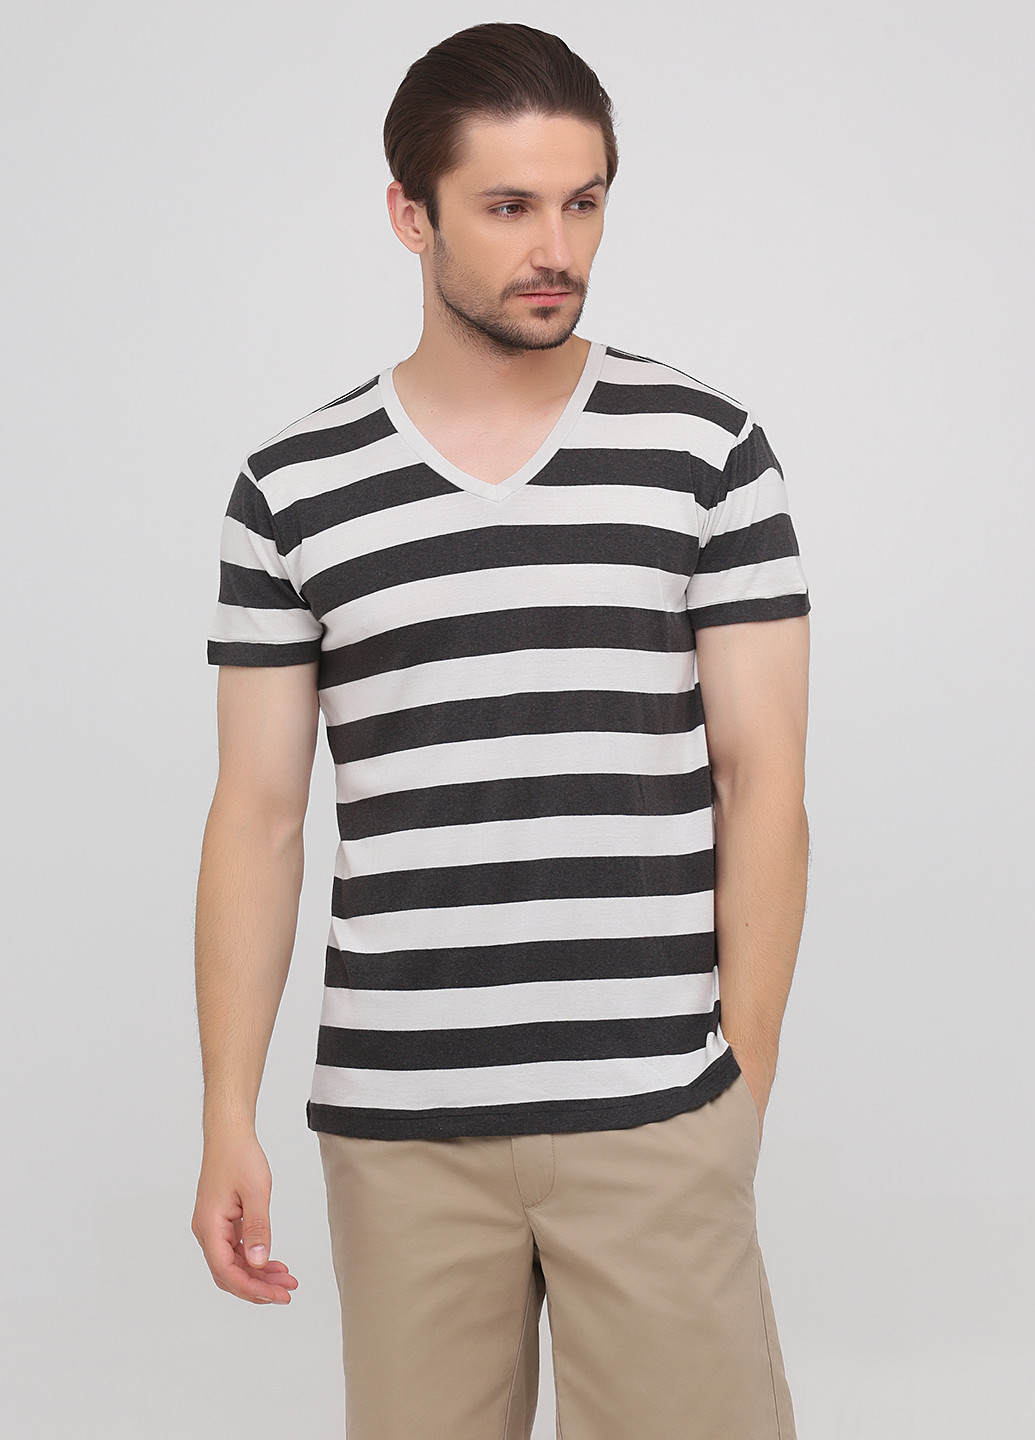 Чорно-біла футболка Ralph Lauren